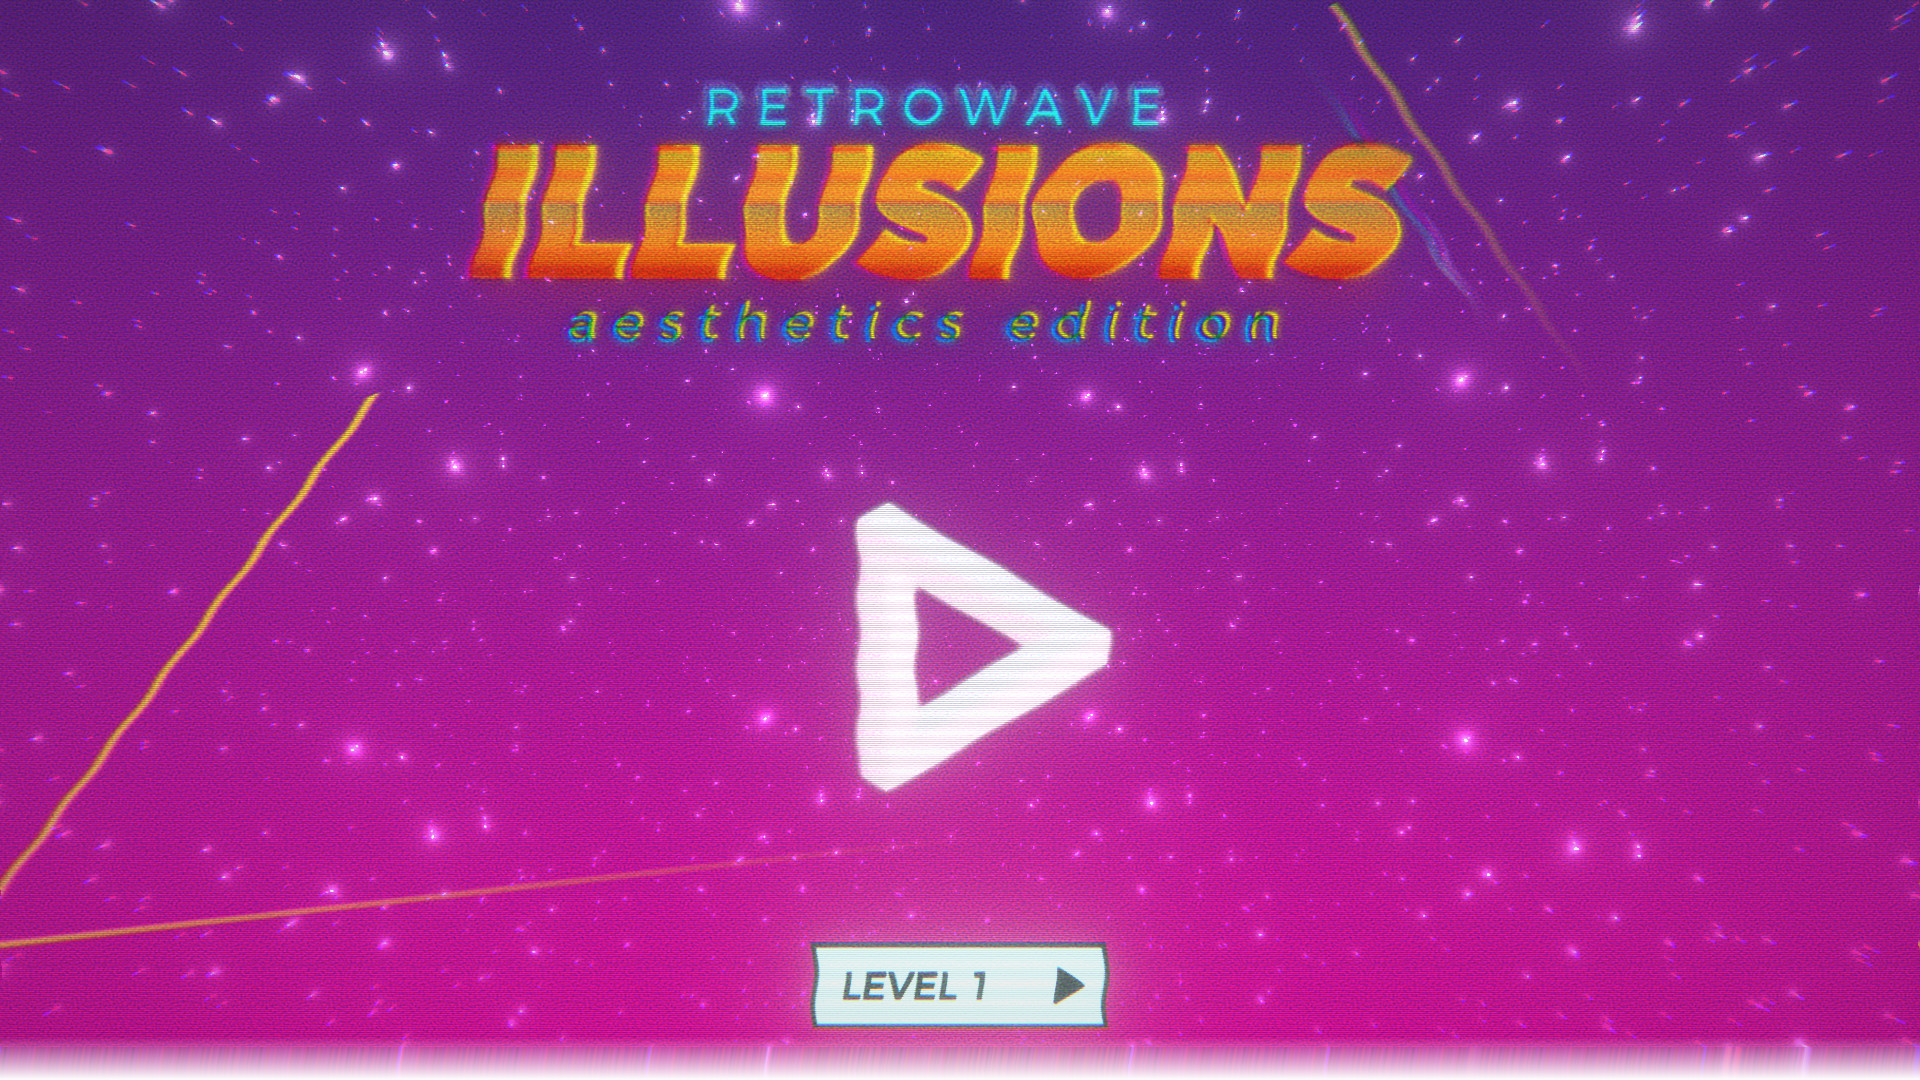 Retrowave Illusions 𝔸𝕖𝕤𝕥𝕙𝕖𝕥𝕚𝕔𝕤 𝔼𝕕𝕚𝕥𝕚𝕠𝕟 Featured Screenshot #1